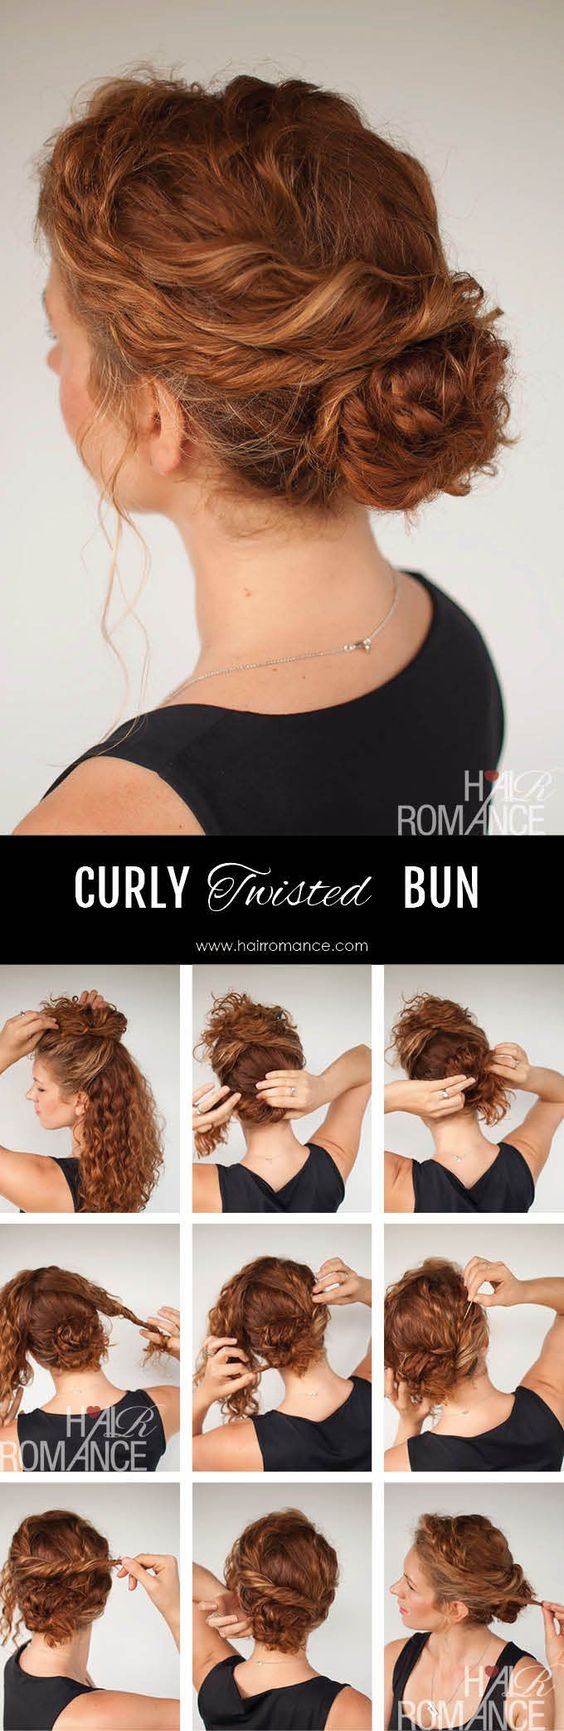 curly-twisted-bun via